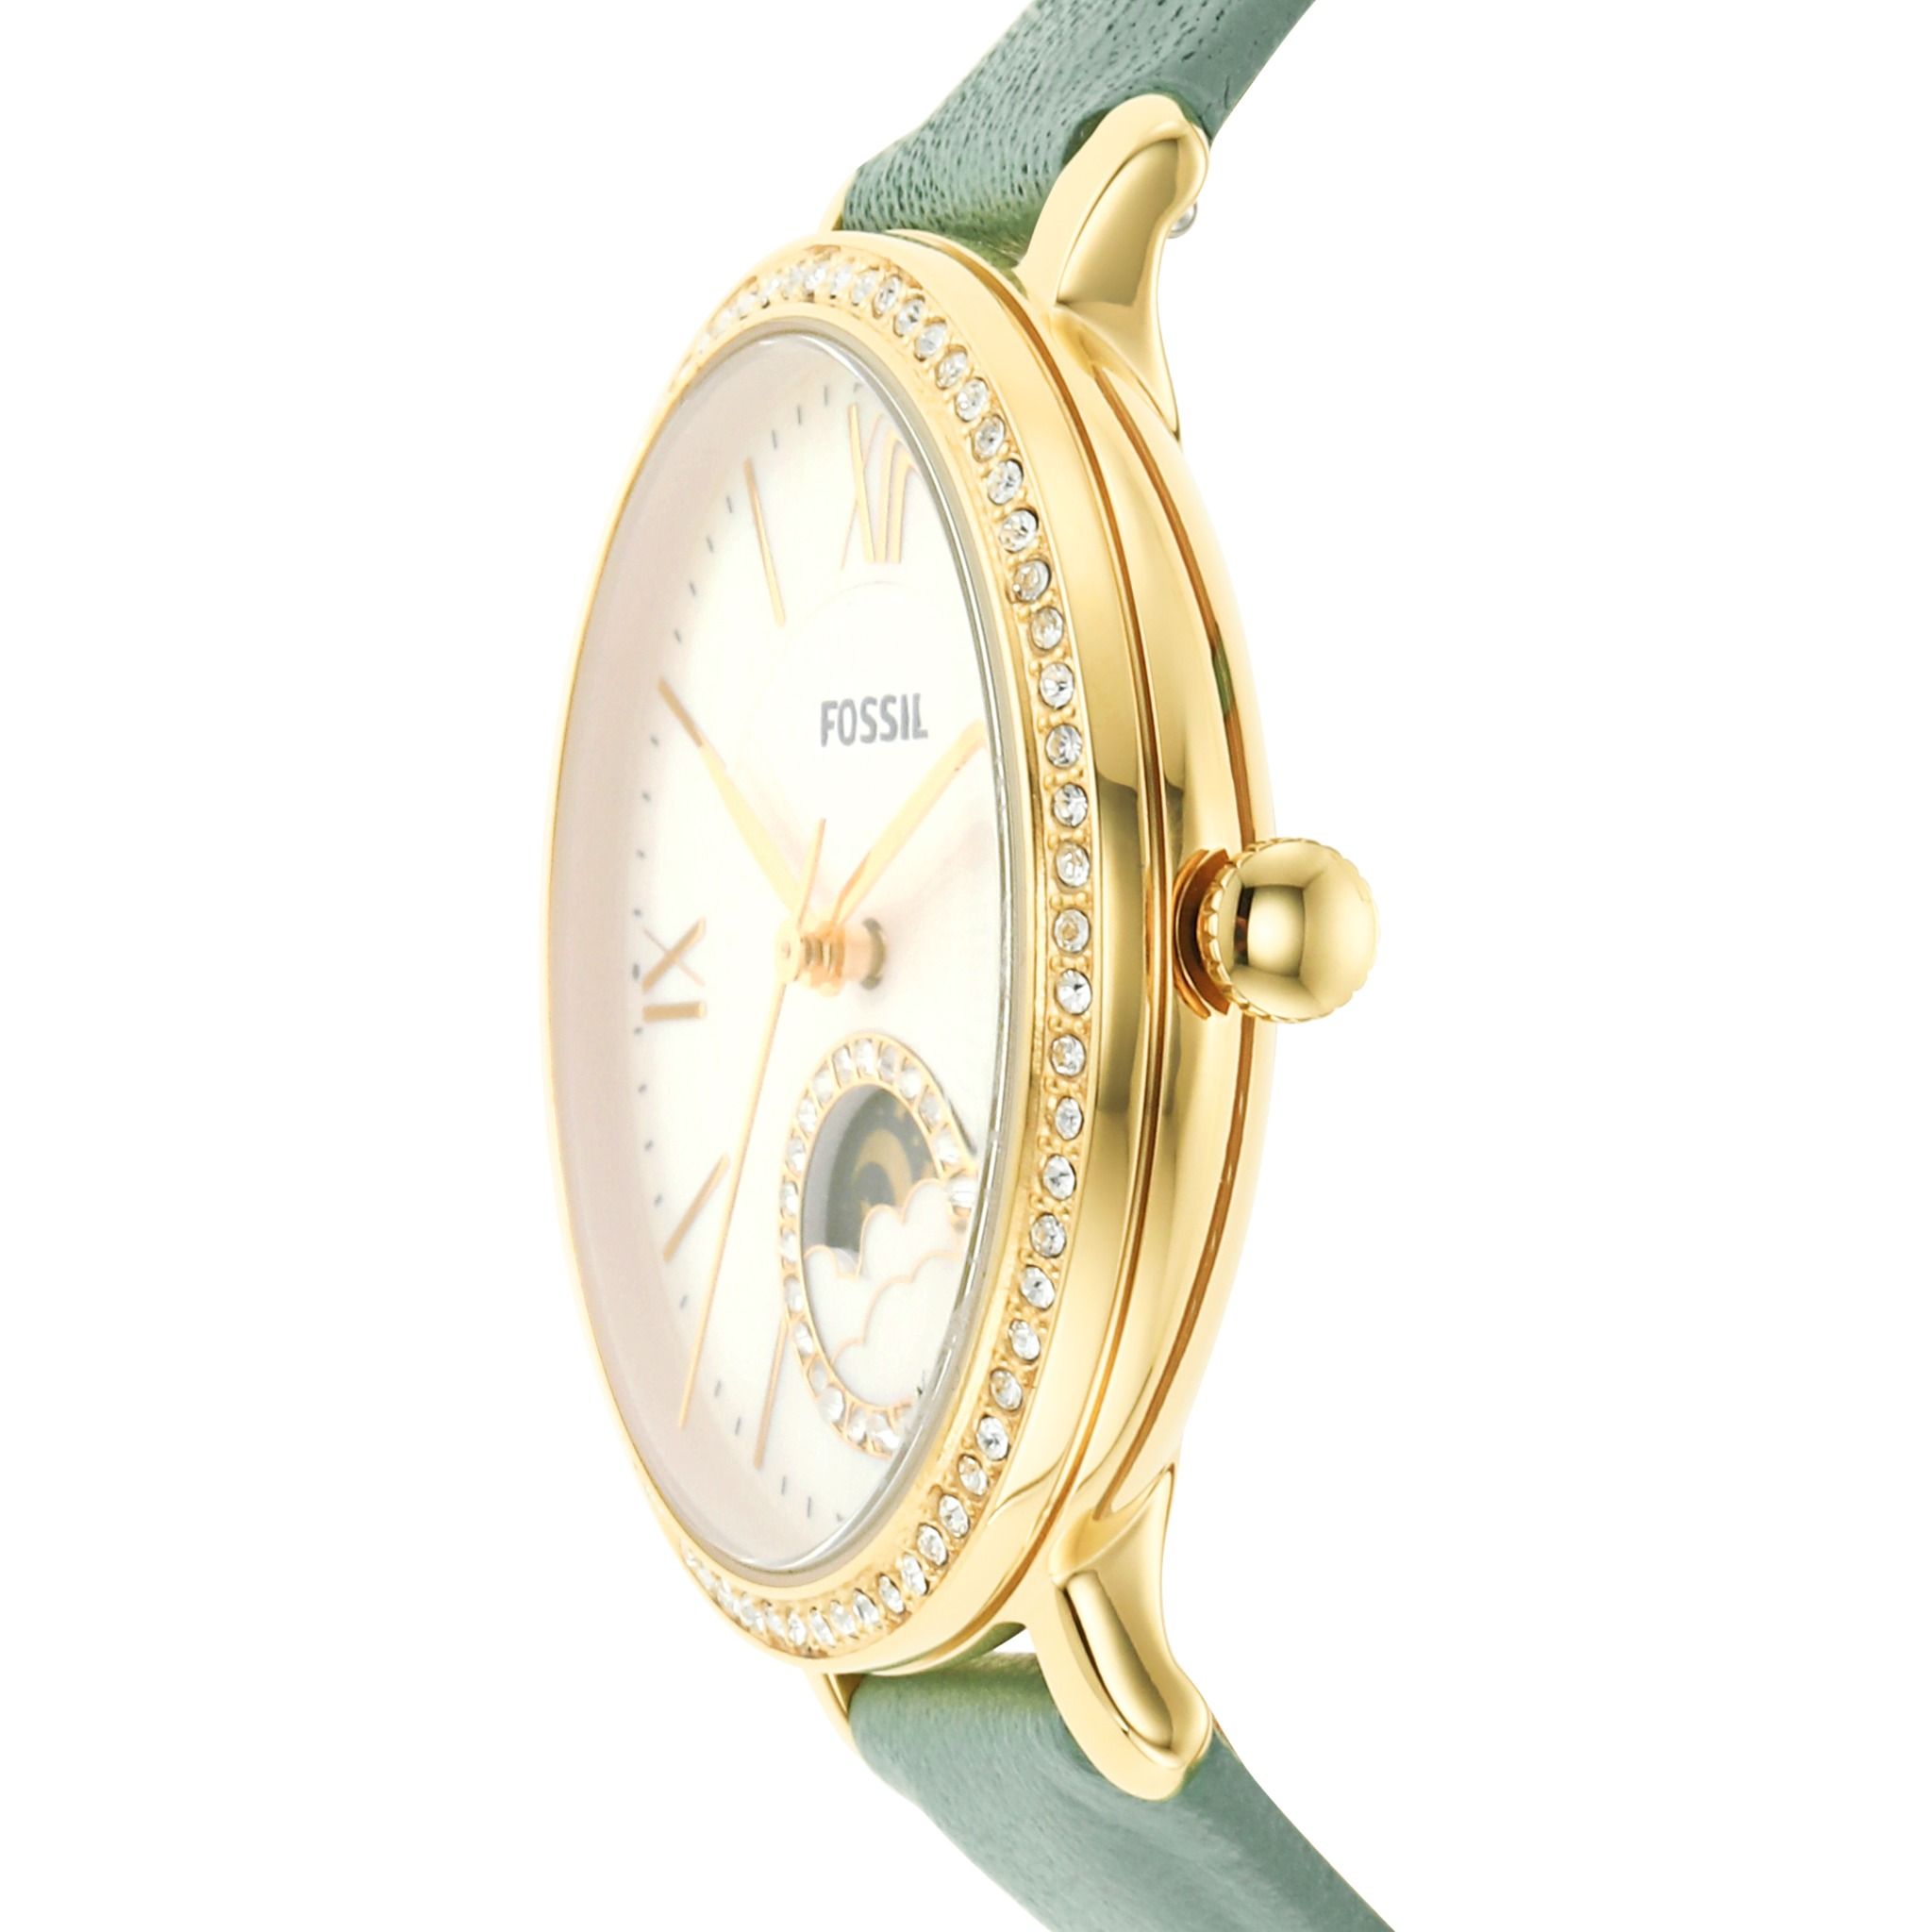  Đồng hồ nữ Fossil JACQUELINE ES5168 dây da - màu xanh lá 